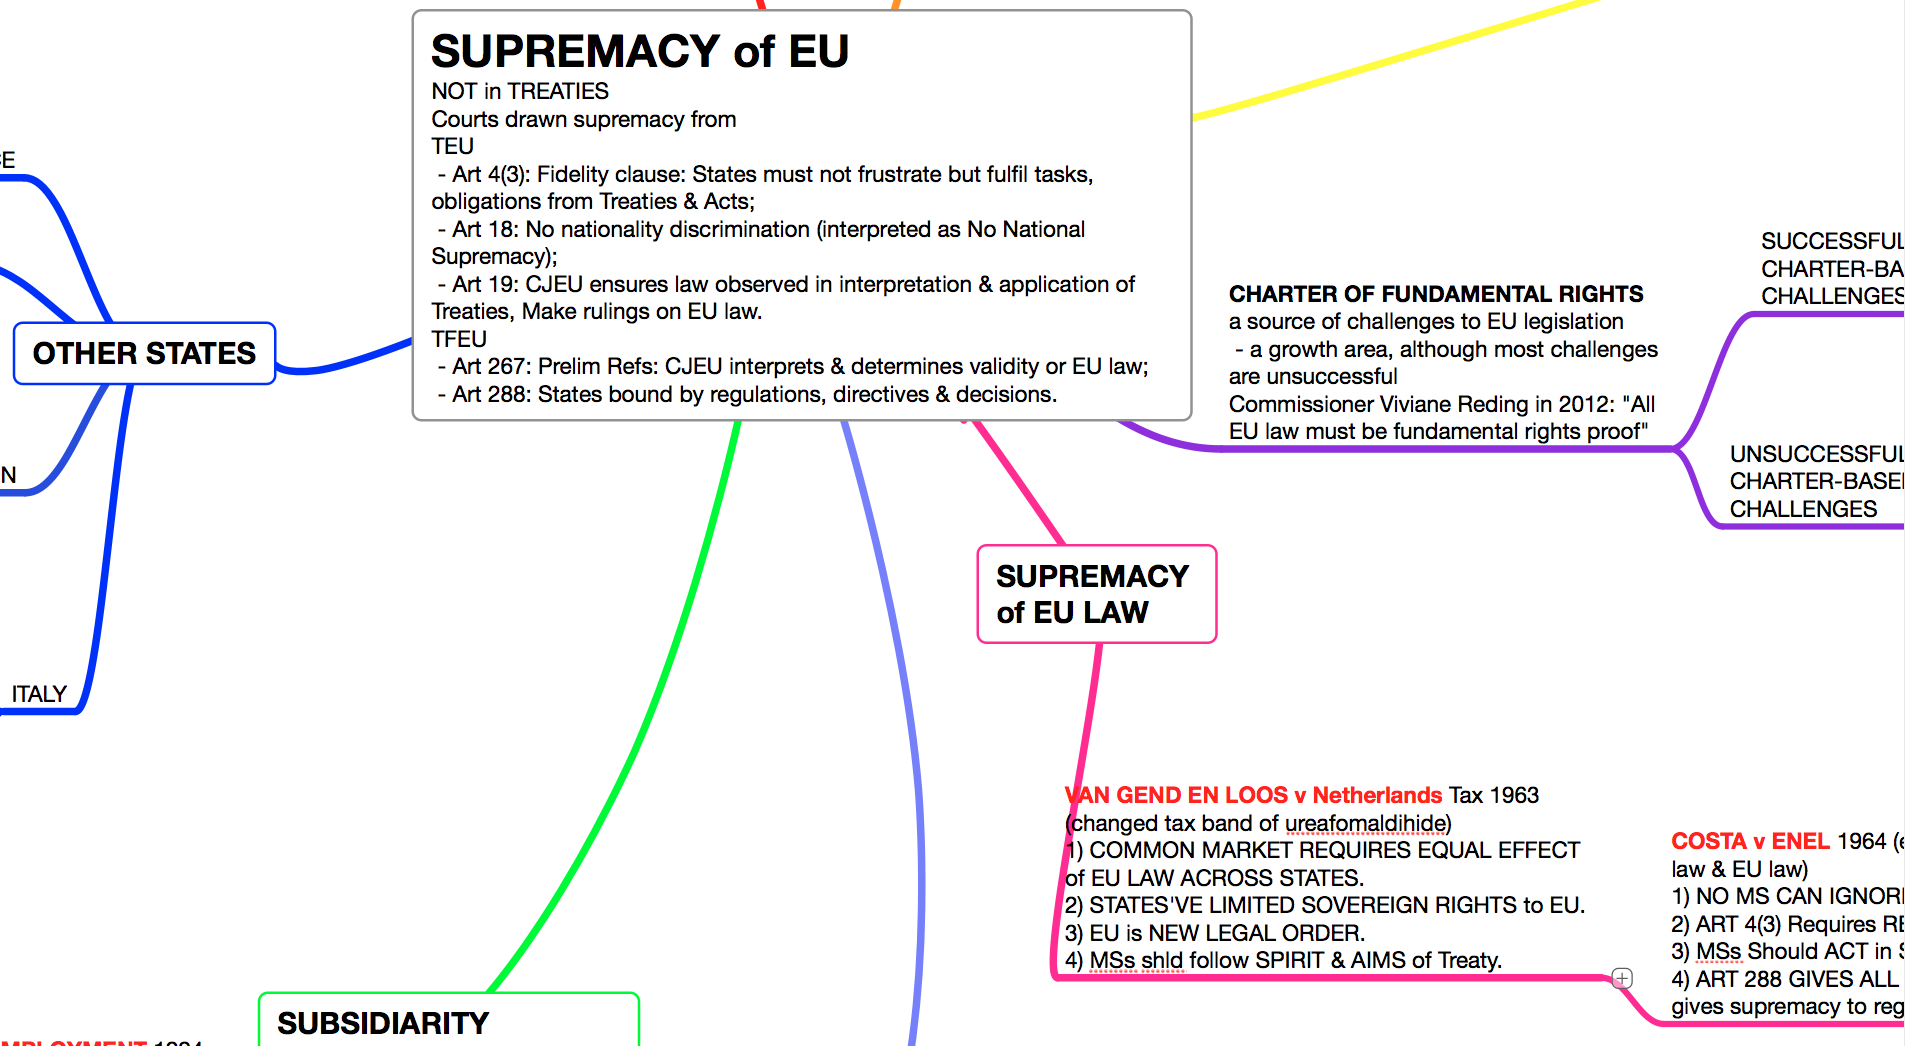 SUPREMACY of EU LAW